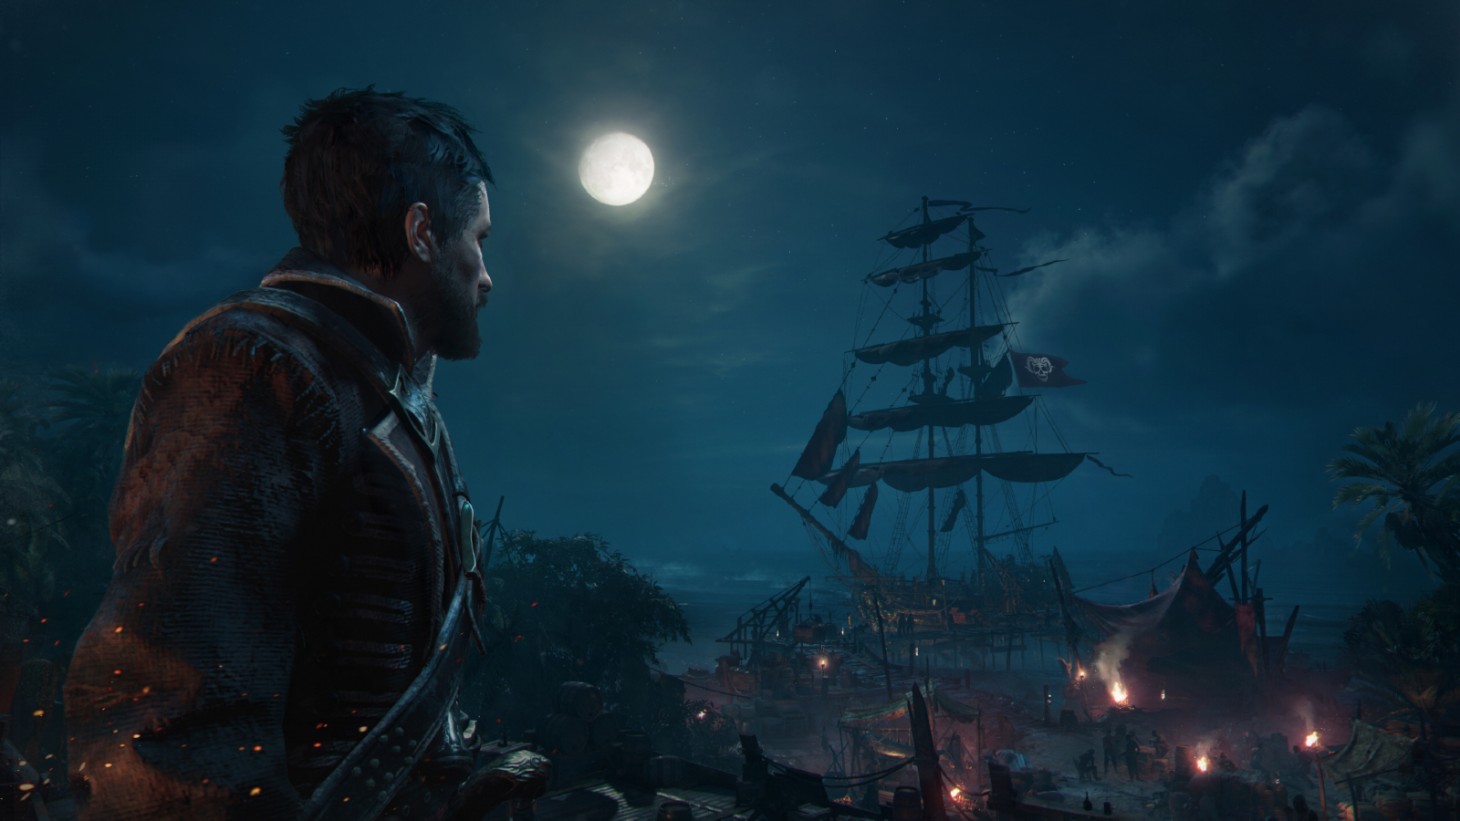 Ubisoft Claims Really Good Progress on Skull and Bones To Investors -  Gameranx